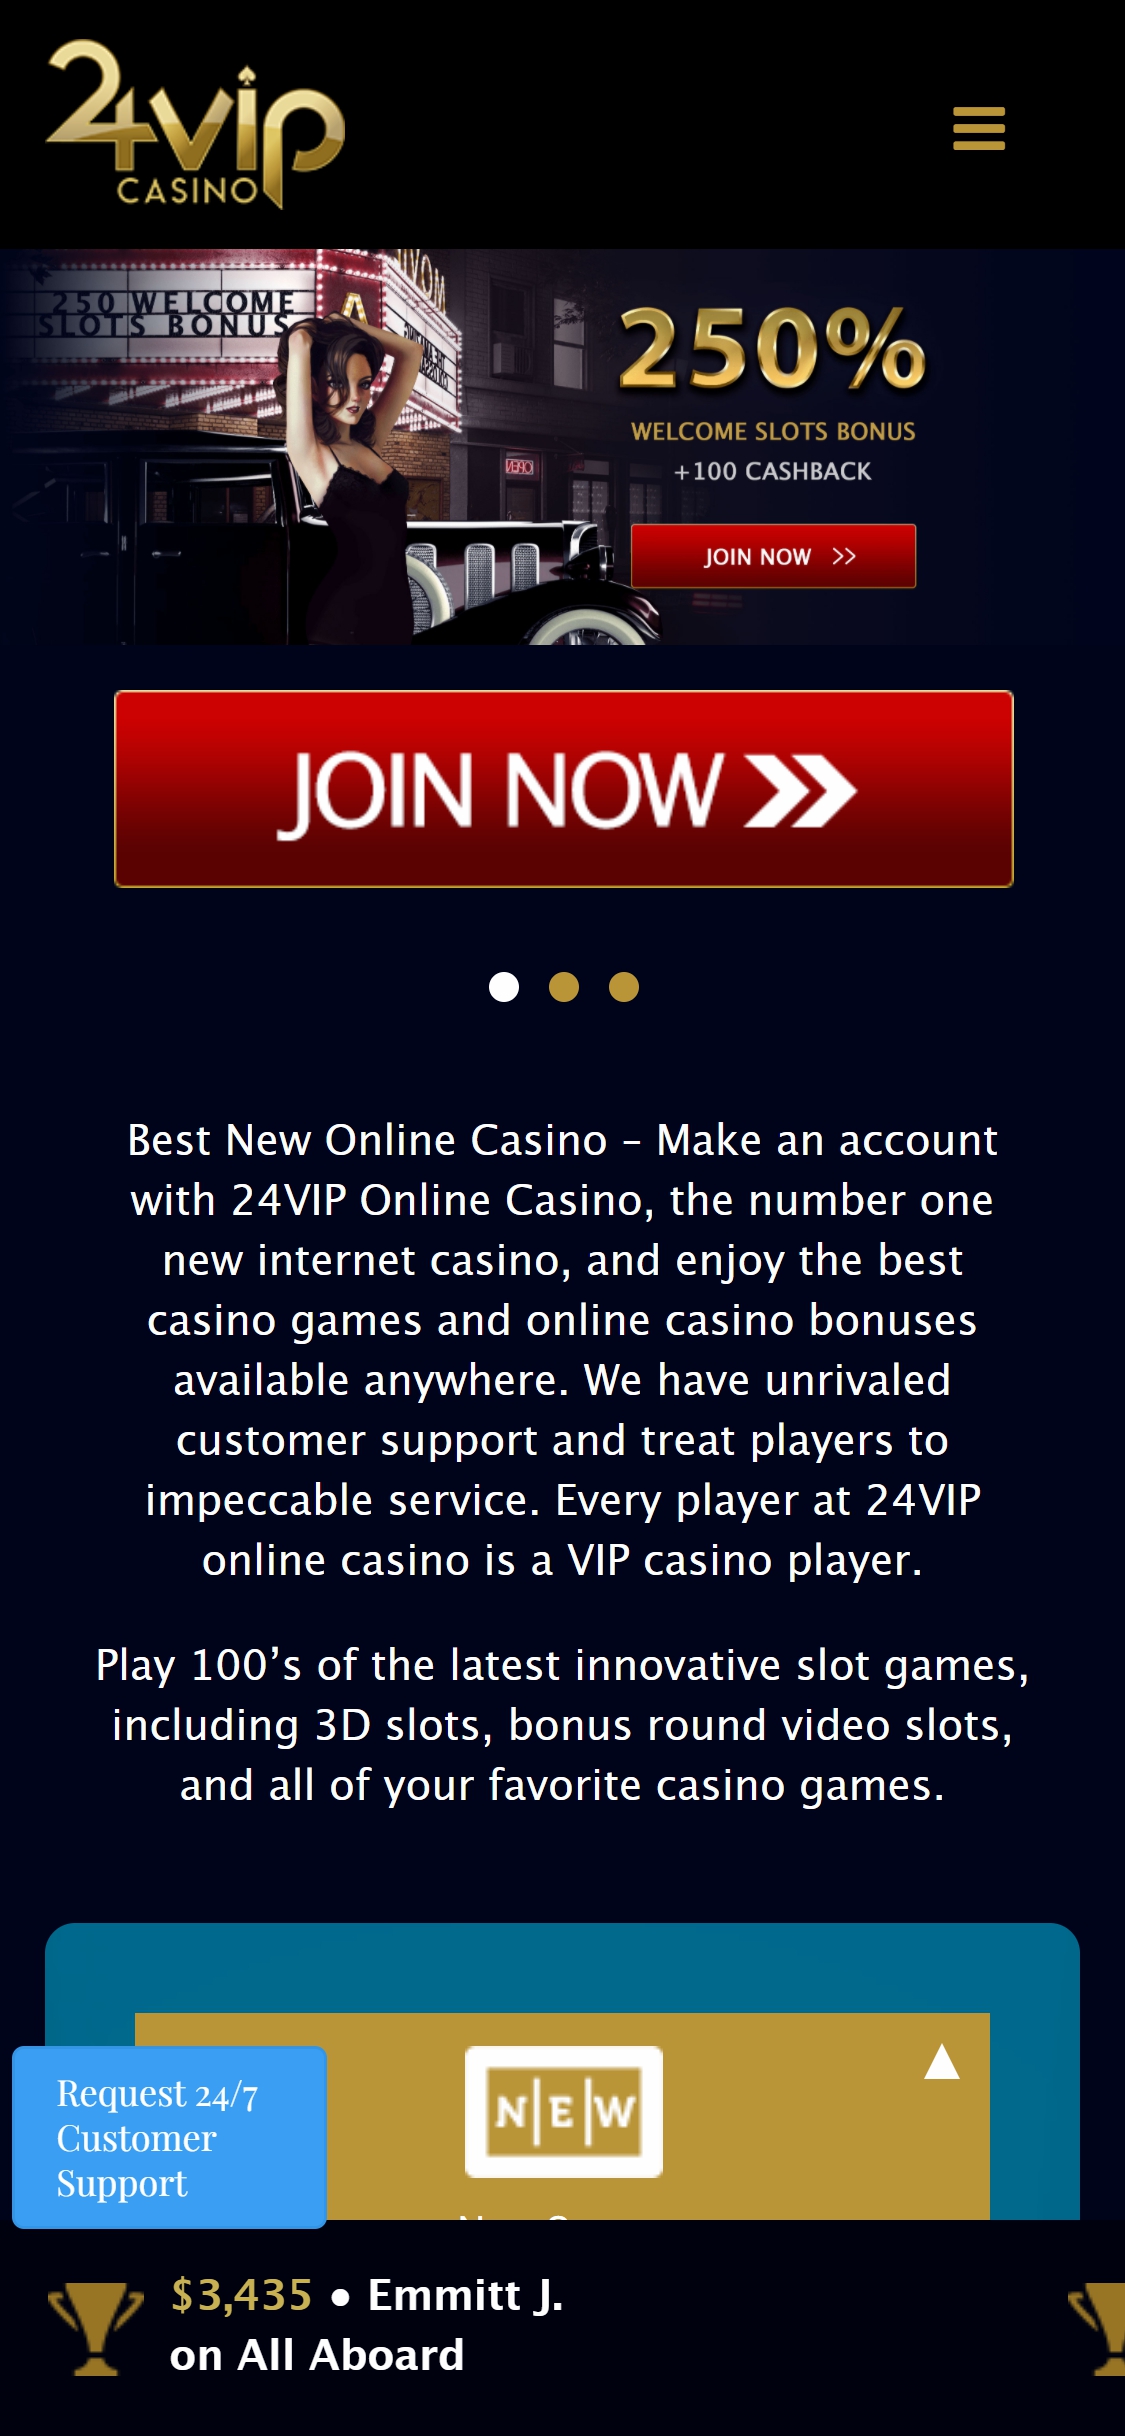 24VIP Casino Mobile Review